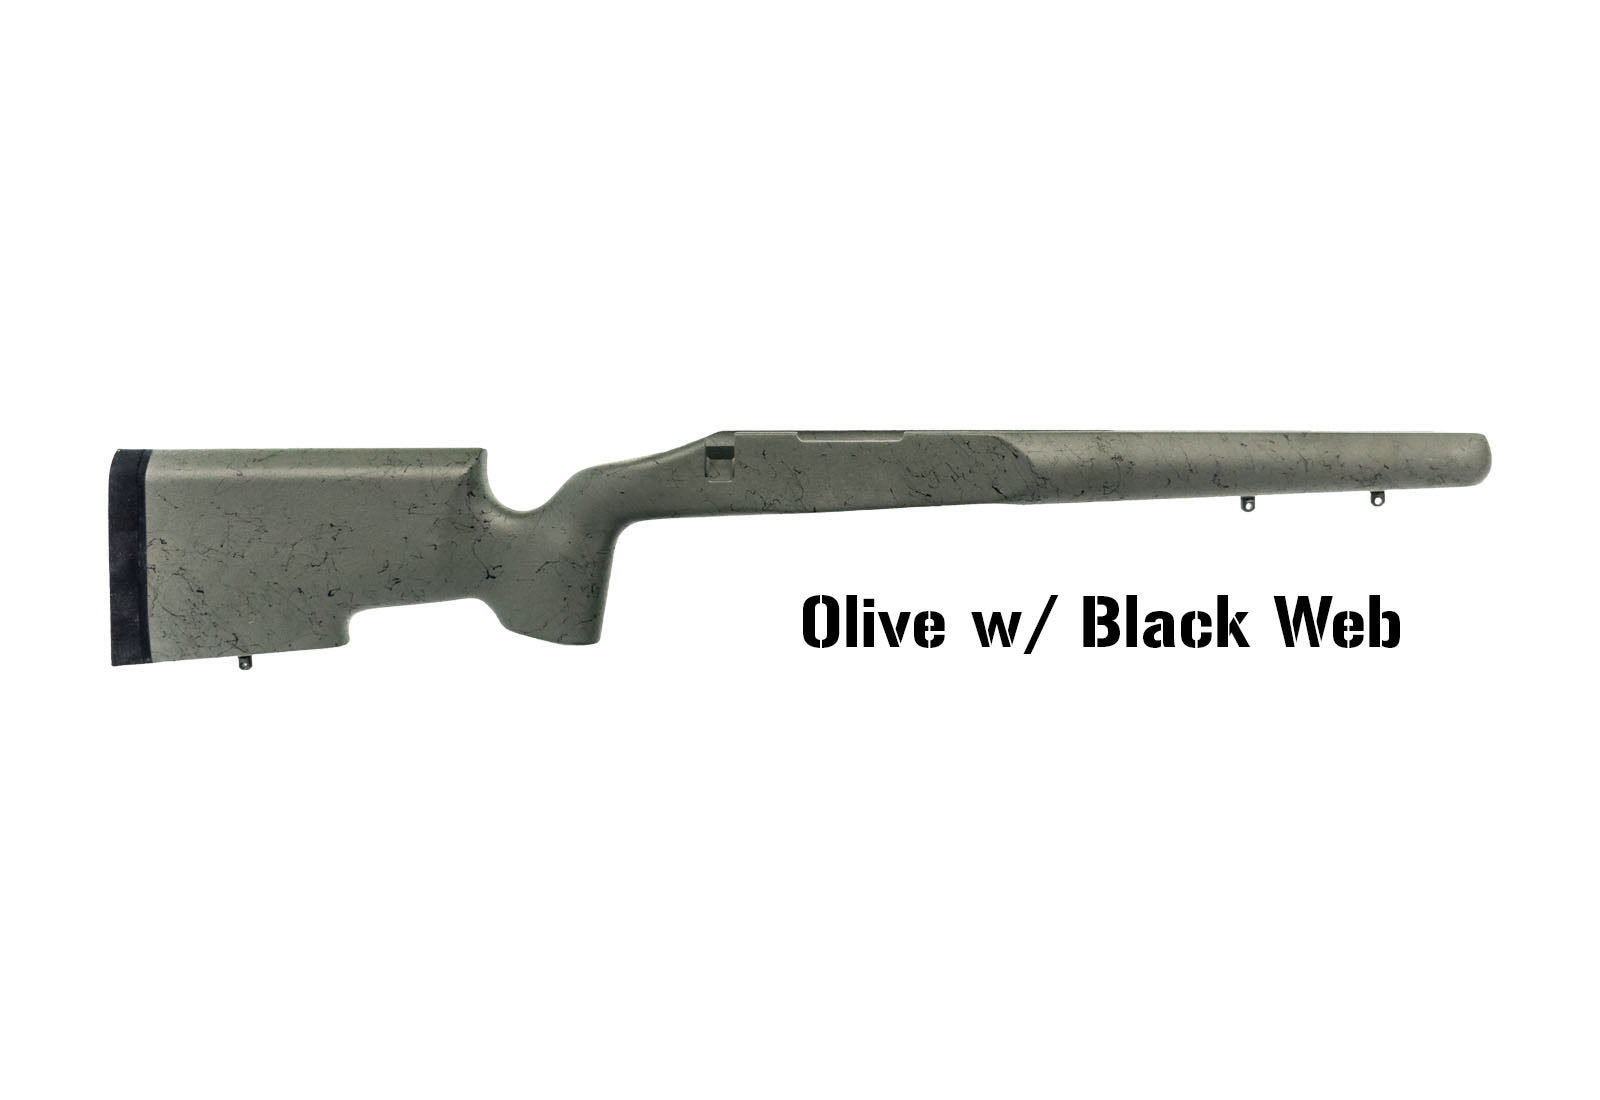 Renegade - Right Hand Rem 700 Short action, M5, Remington Varmint/Sendero barrel.  Painted Olive w/ Black Web.